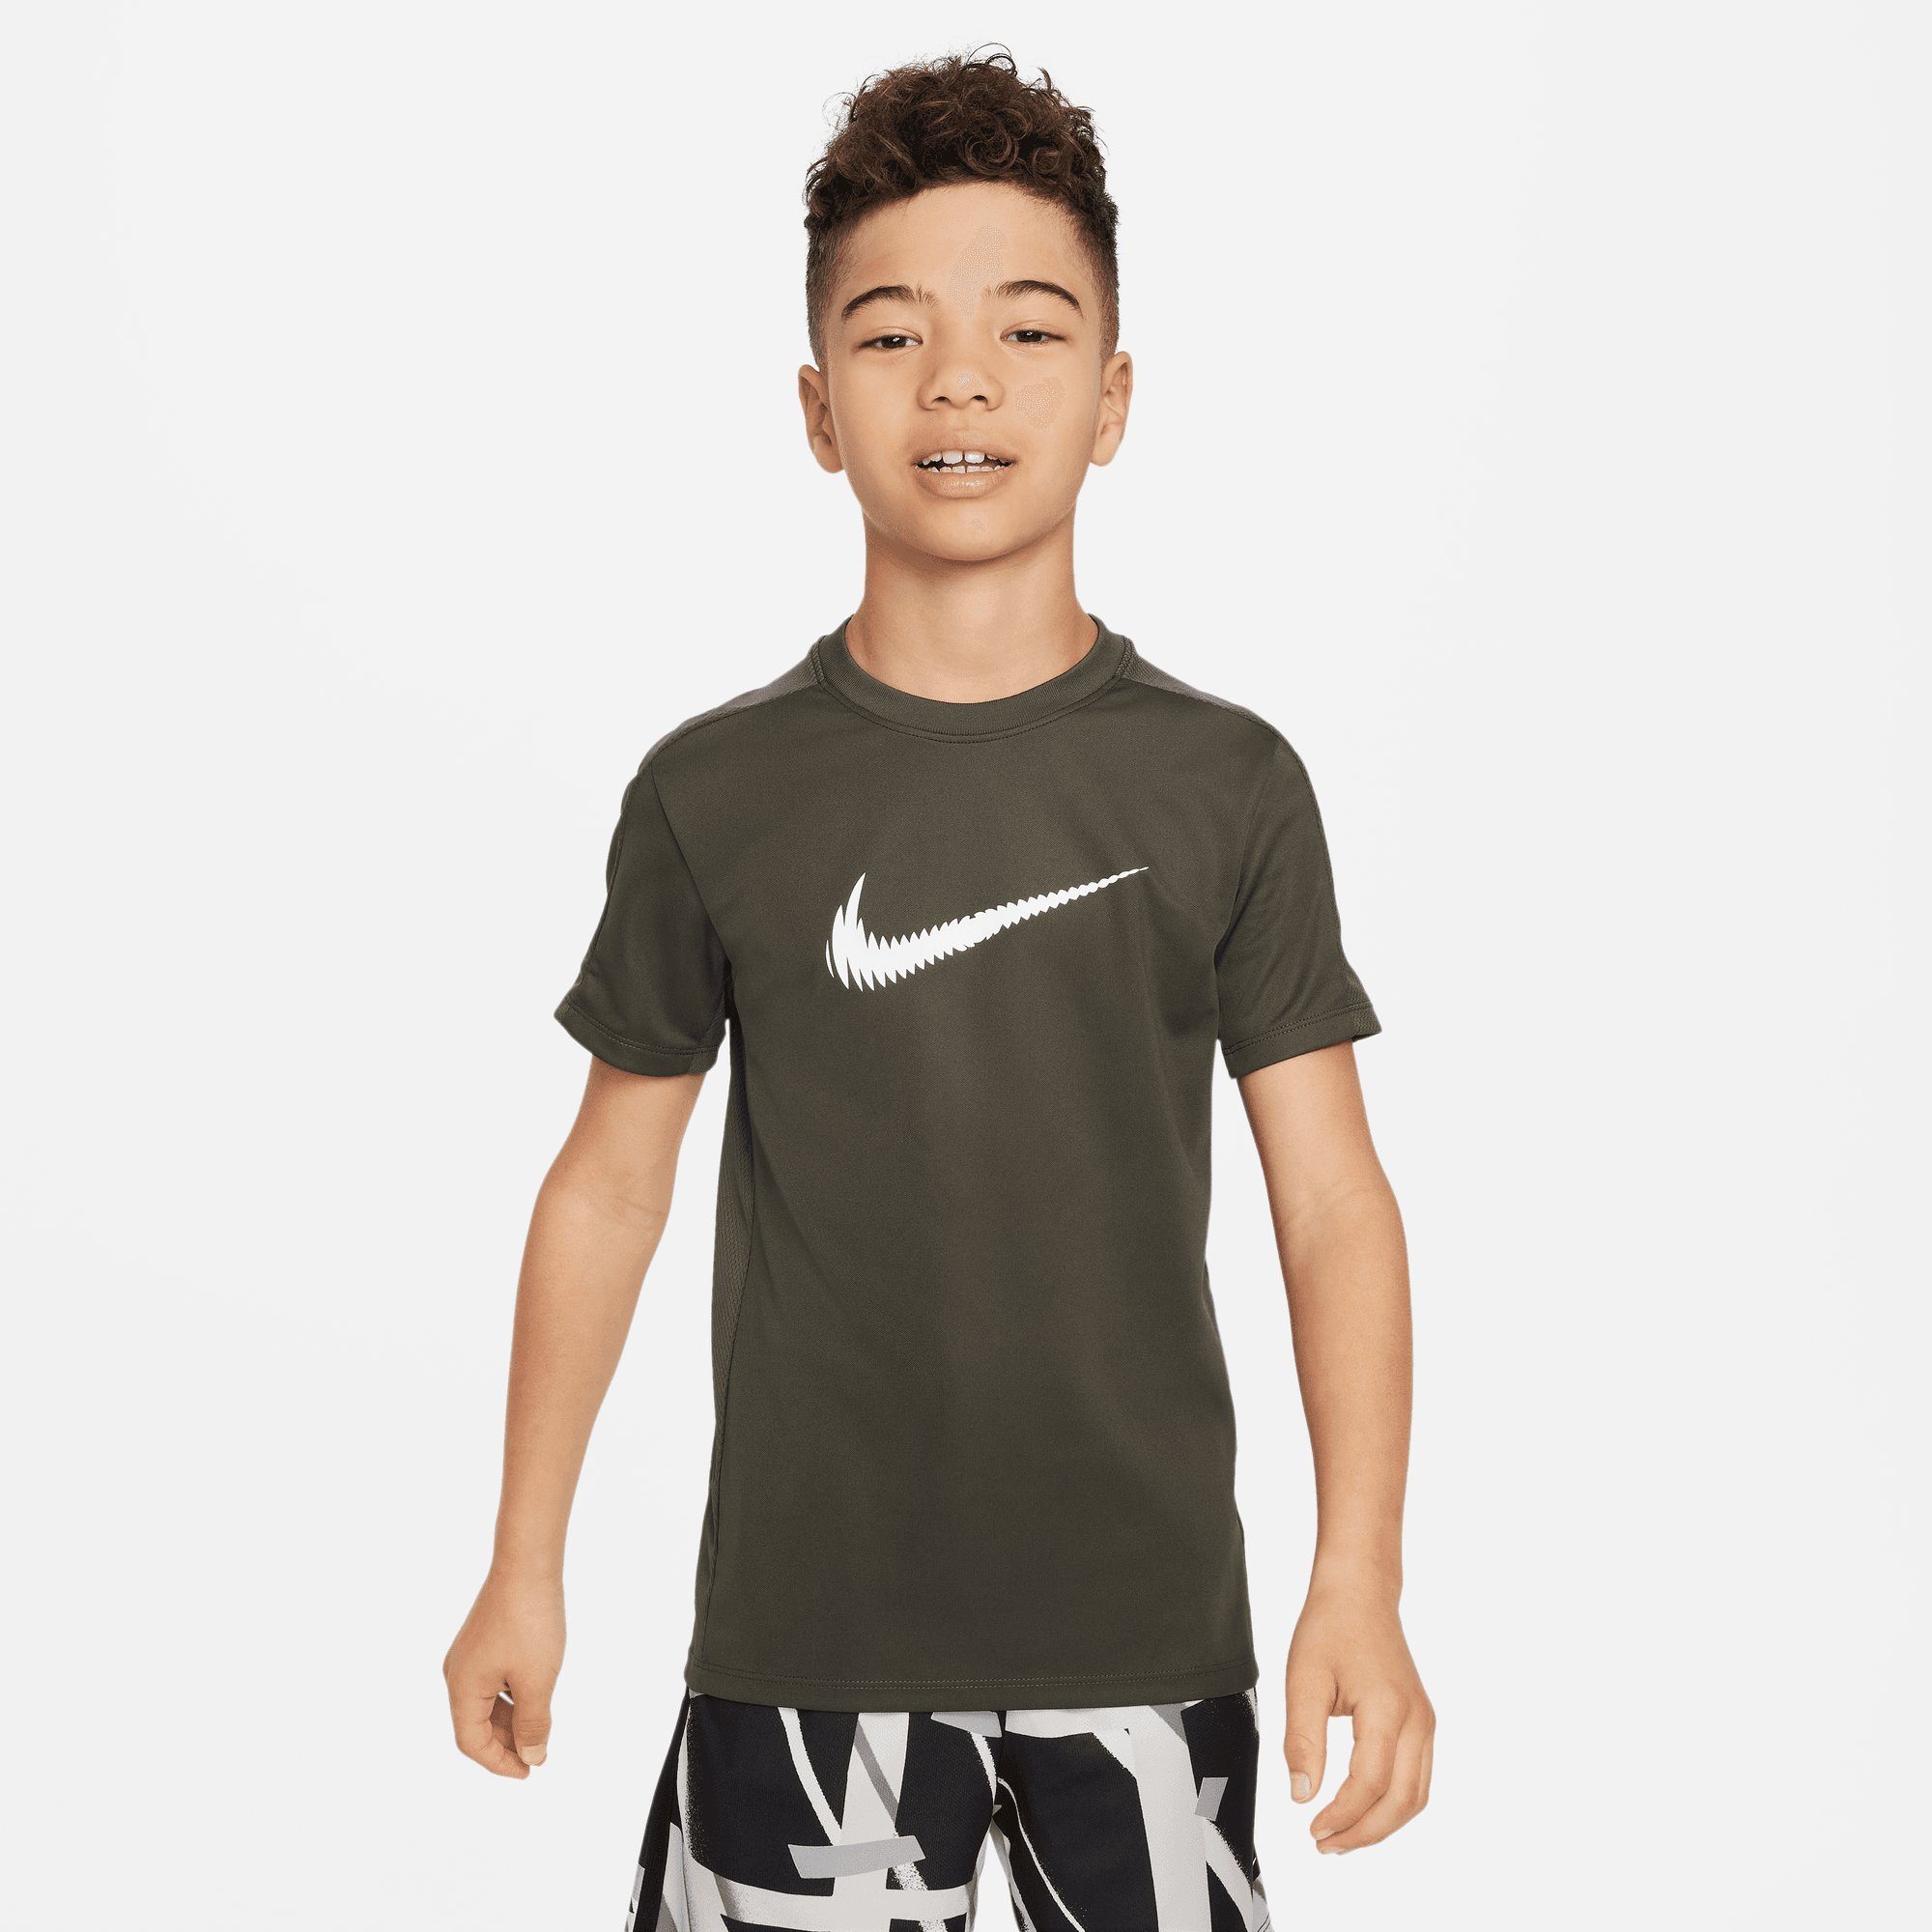 Nike Trainingsshirt Sleeve NK TOP Kinder - Short für TRPHY K KHAKI/WHITE GX DF CARGO